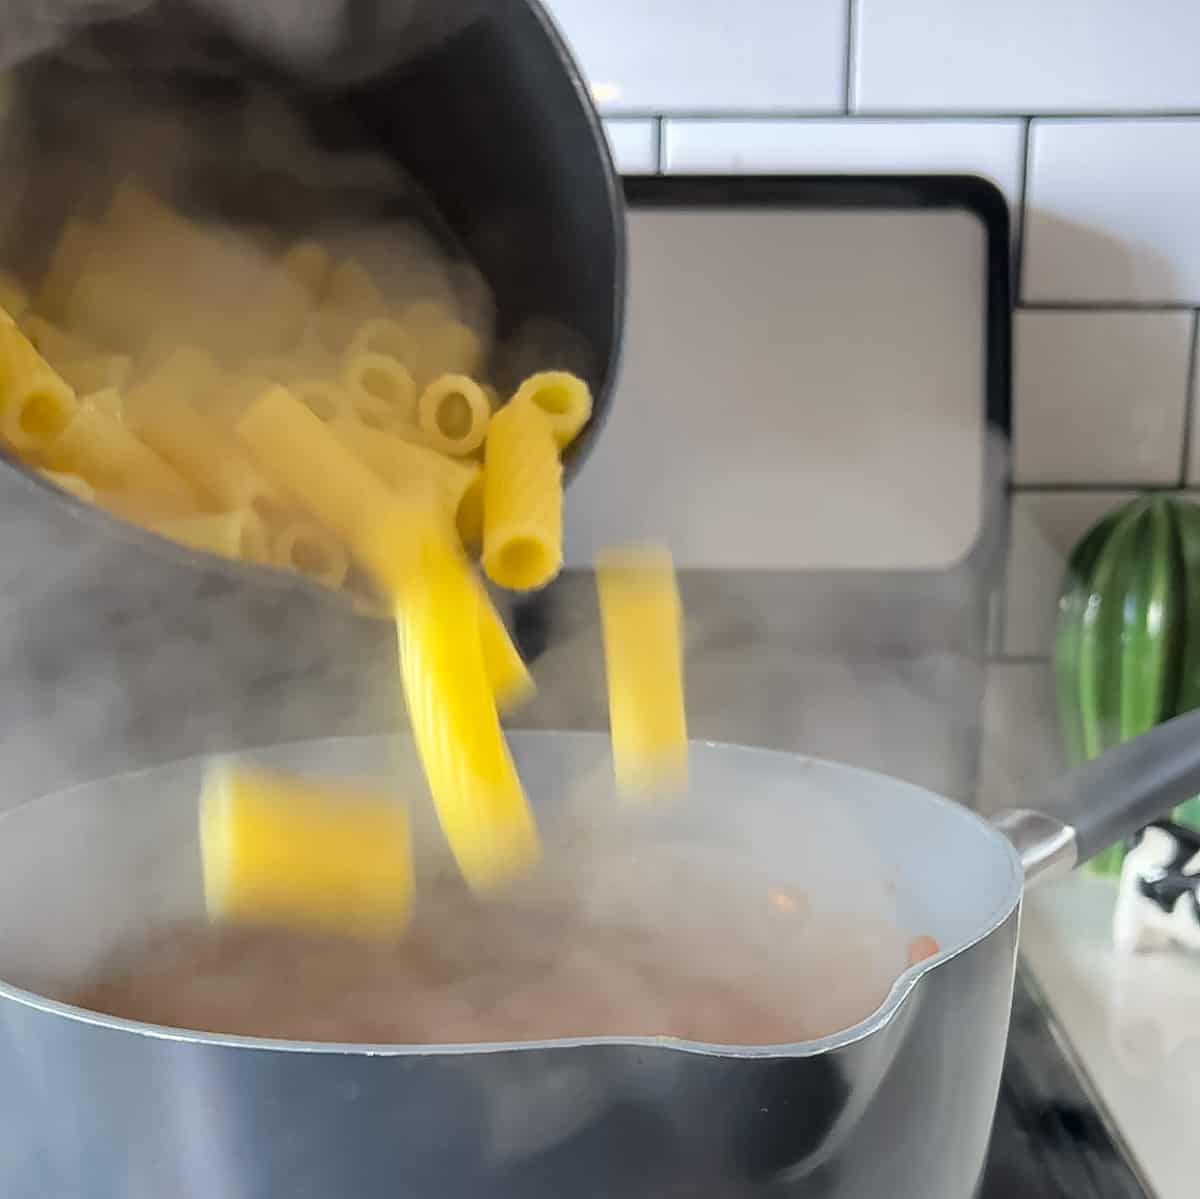 add pasta to sauce